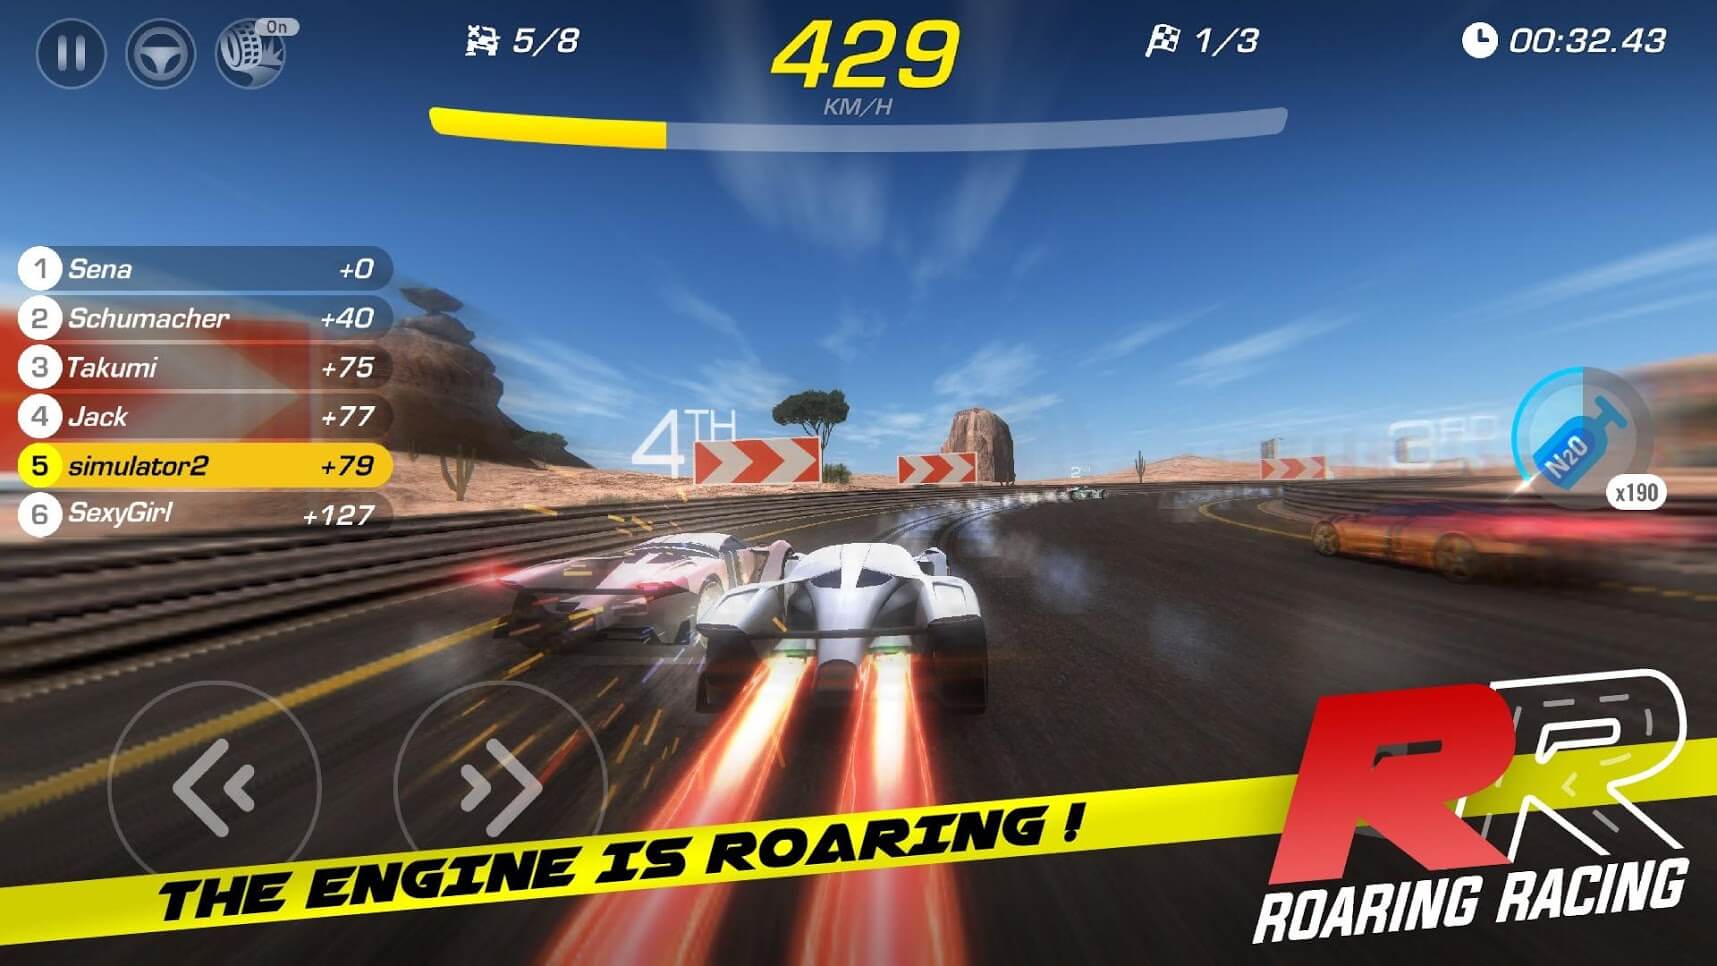 Roaring-Racing-3.jpg